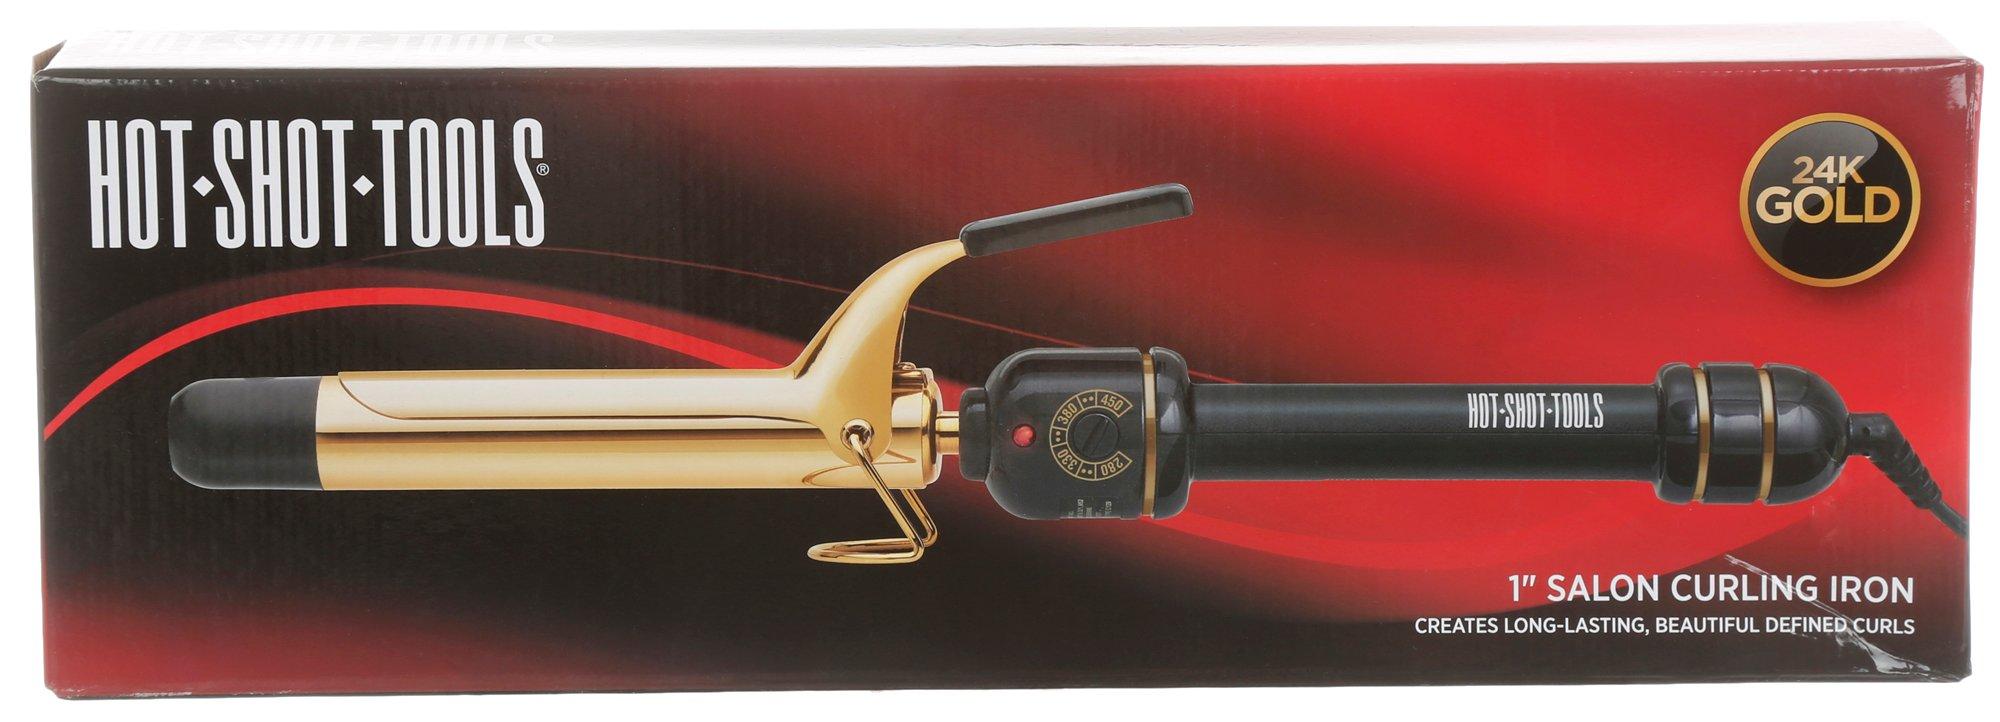 24K Gold Salon Curling Iron